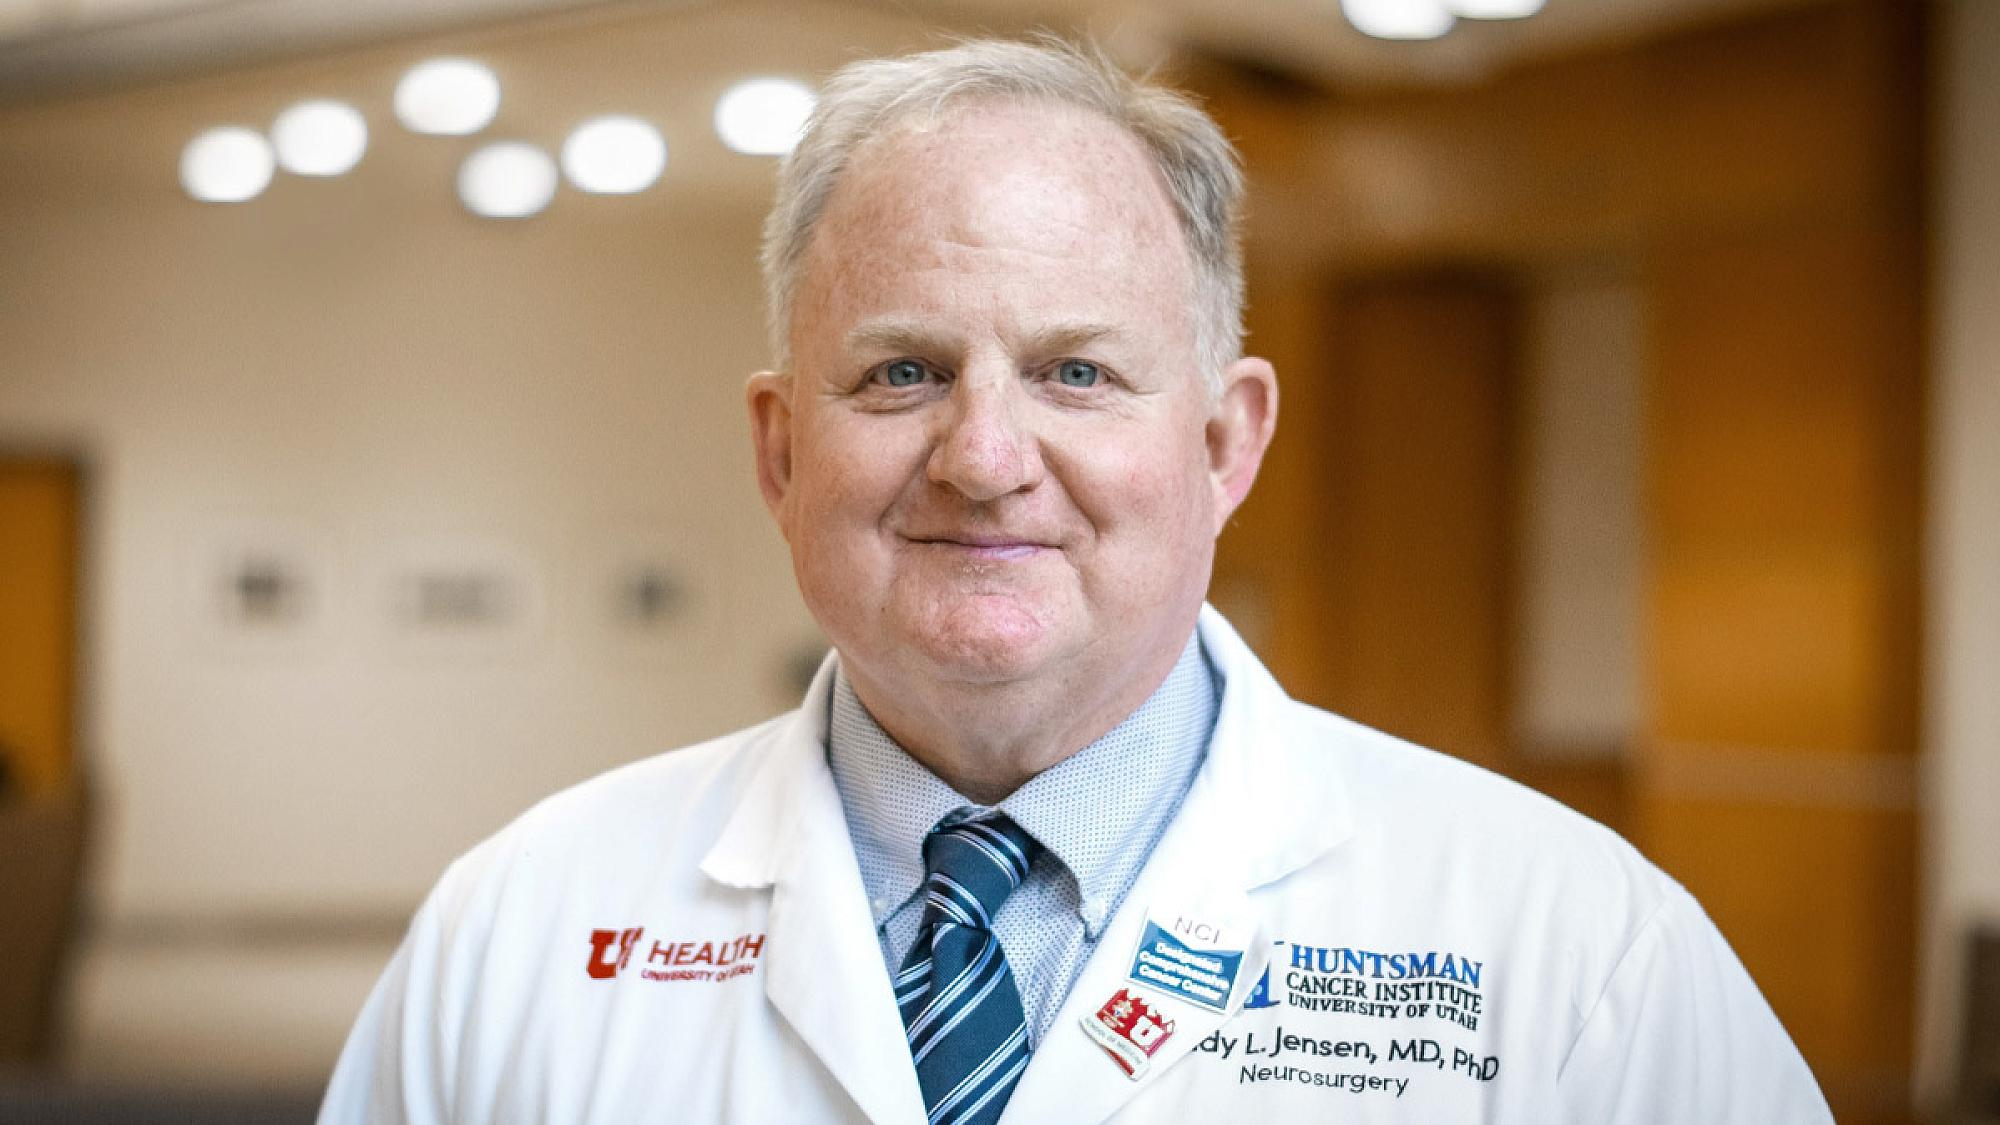 Randy Jensen, MD, PhD